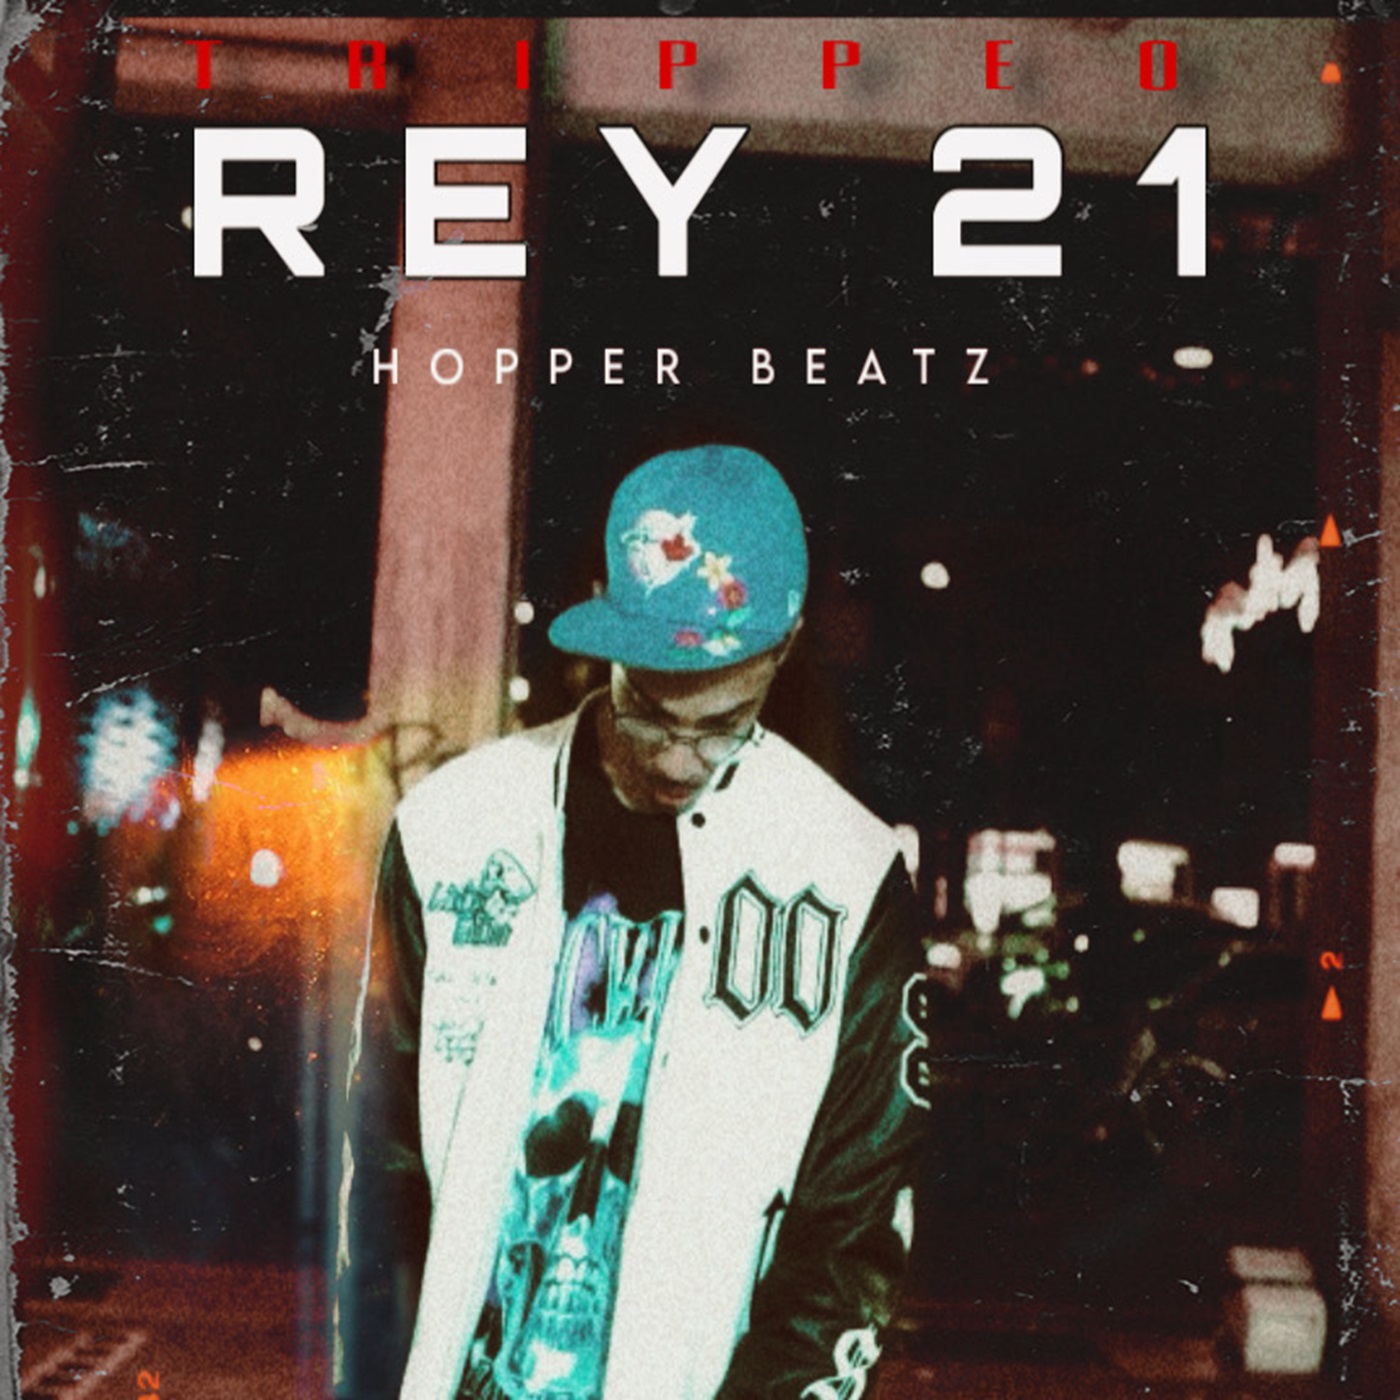 Hopper Beatz ft Rey21 - Trippeo (Prod By Hopper Beatz)